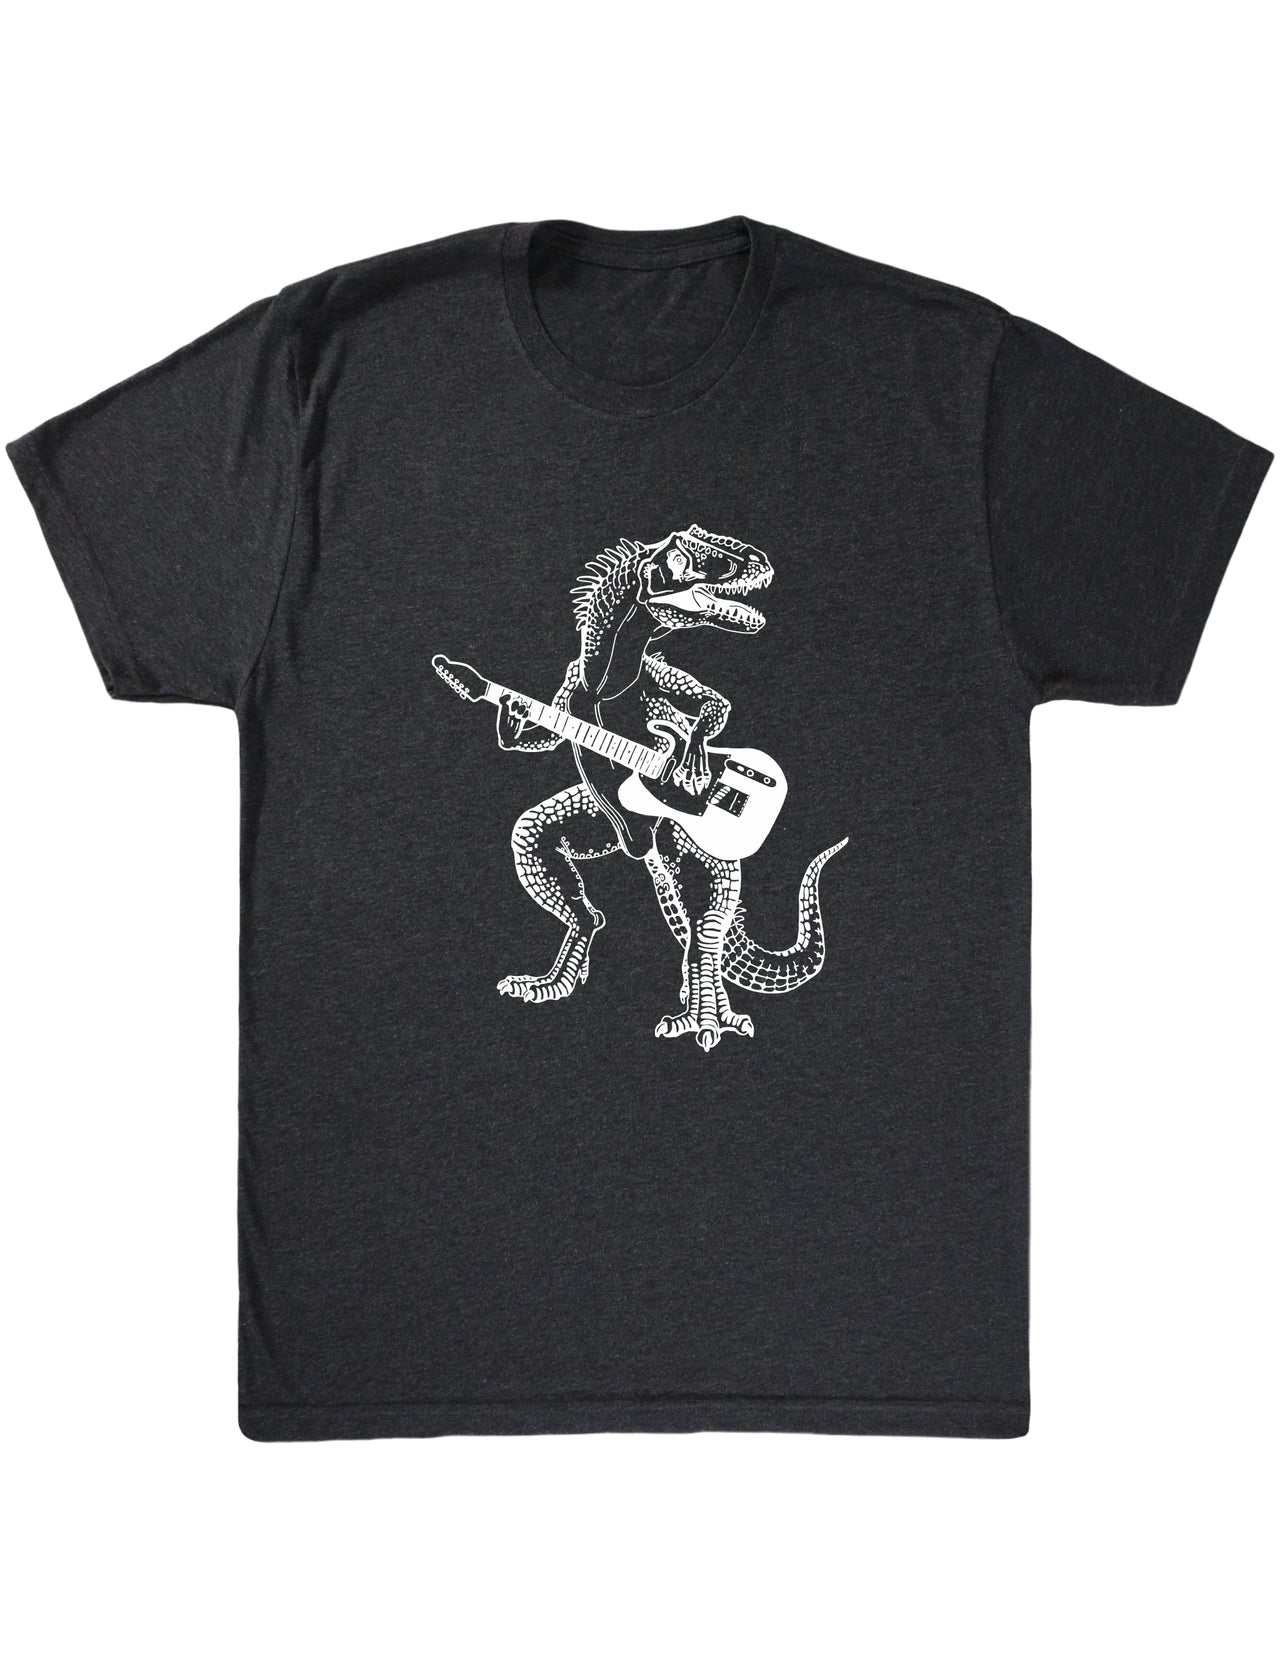 seembo-vintage-black-t-shirt-with-dinosaur-playing-guitar-guitarist-art-on-it